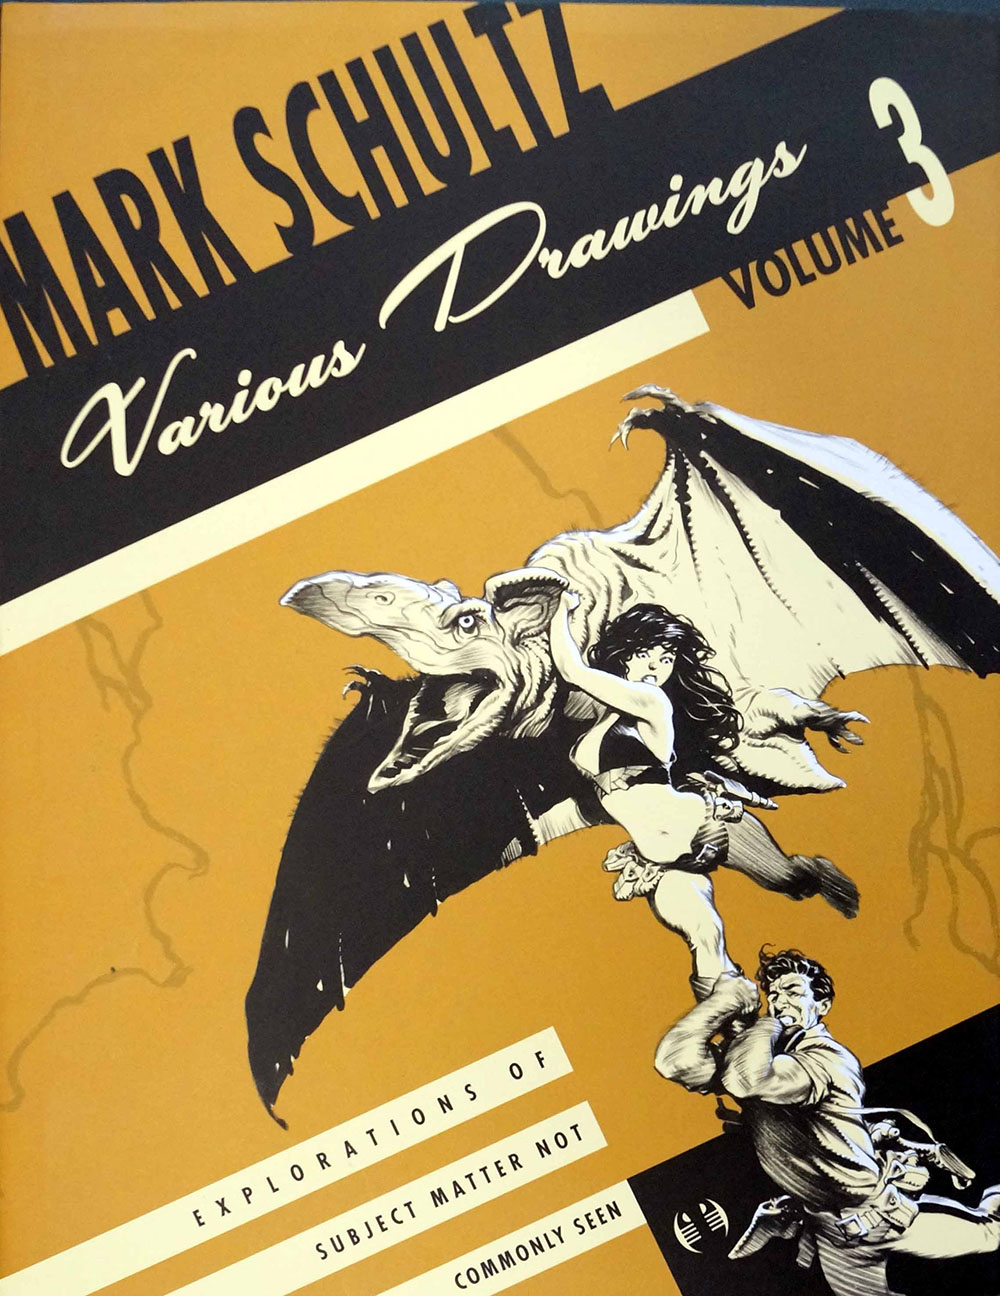 Mark Schultz - Various Drawings Vol. 3 (Hardback Edition) at The Book Palace